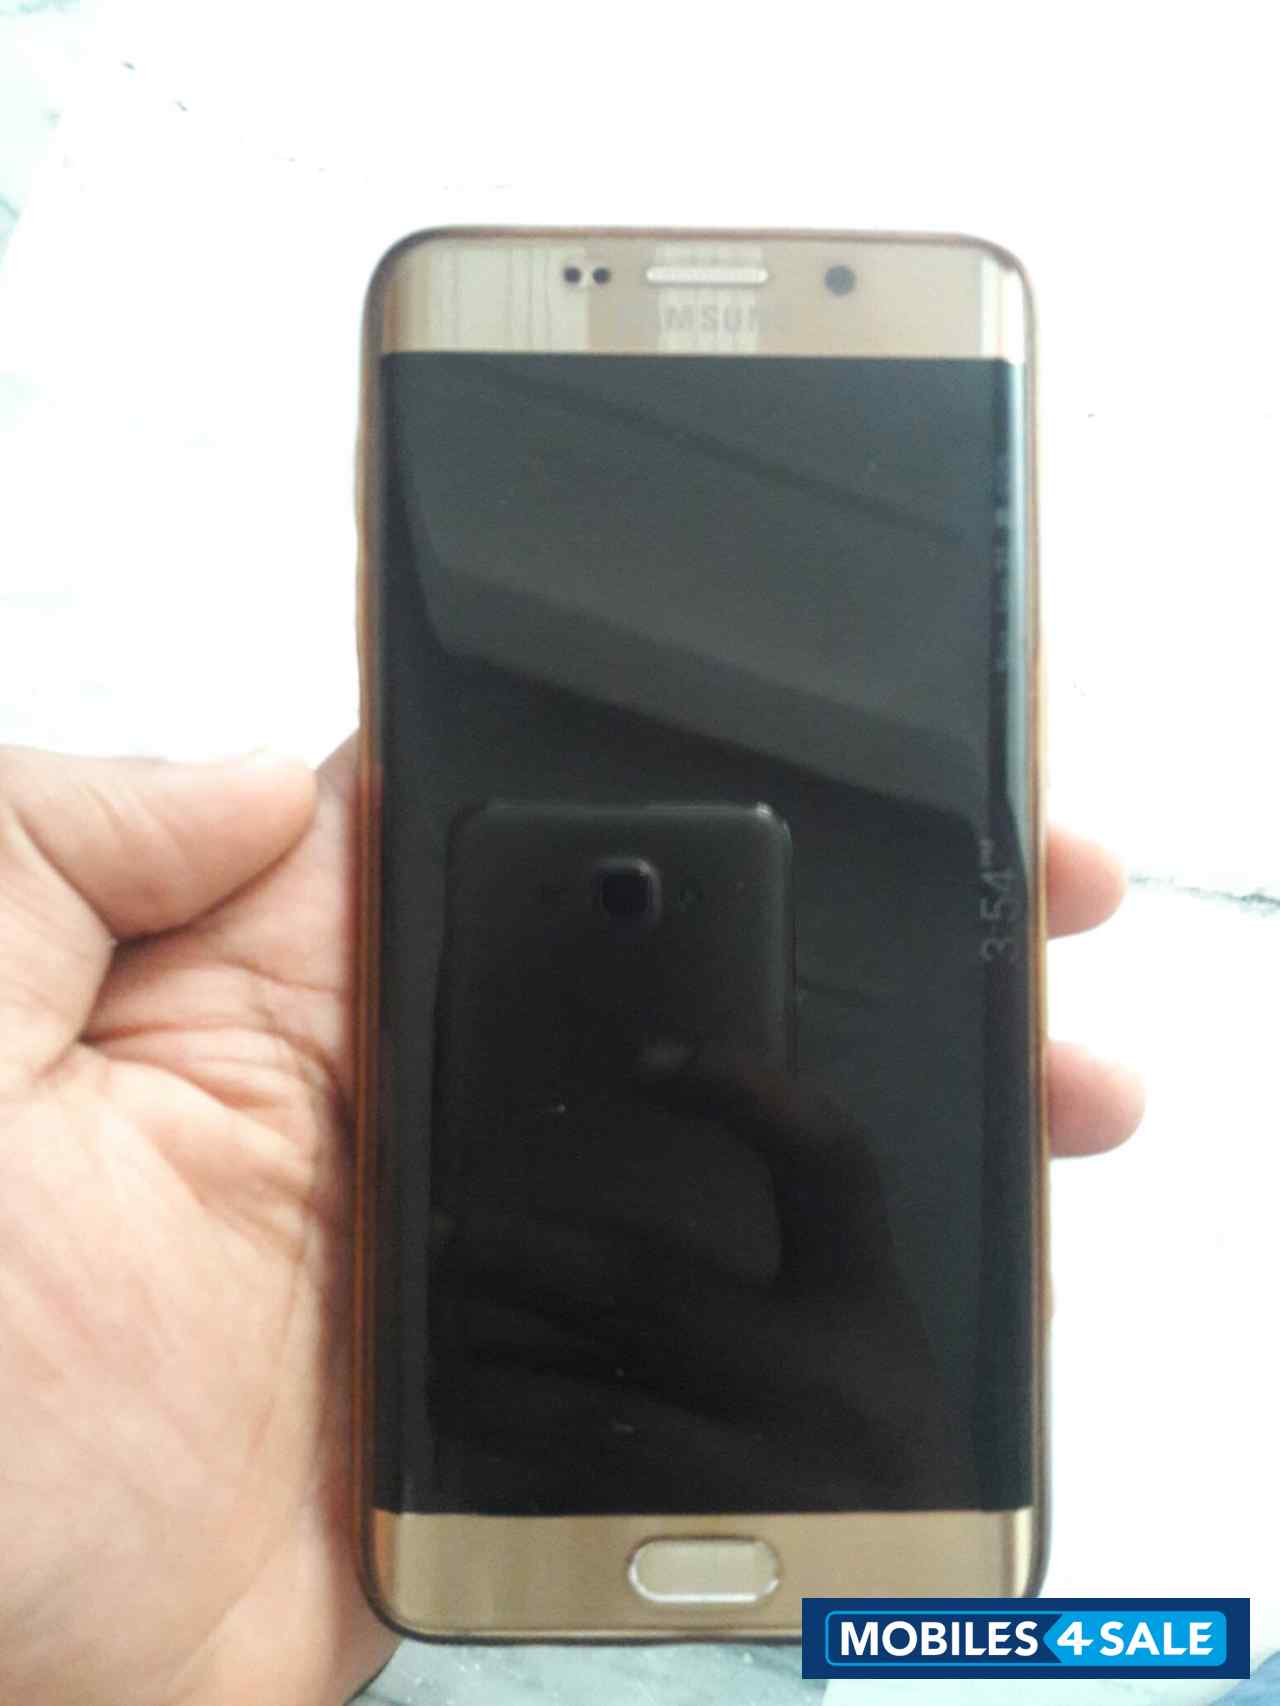 Gold Samsung Galaxy S6 Edge Plus